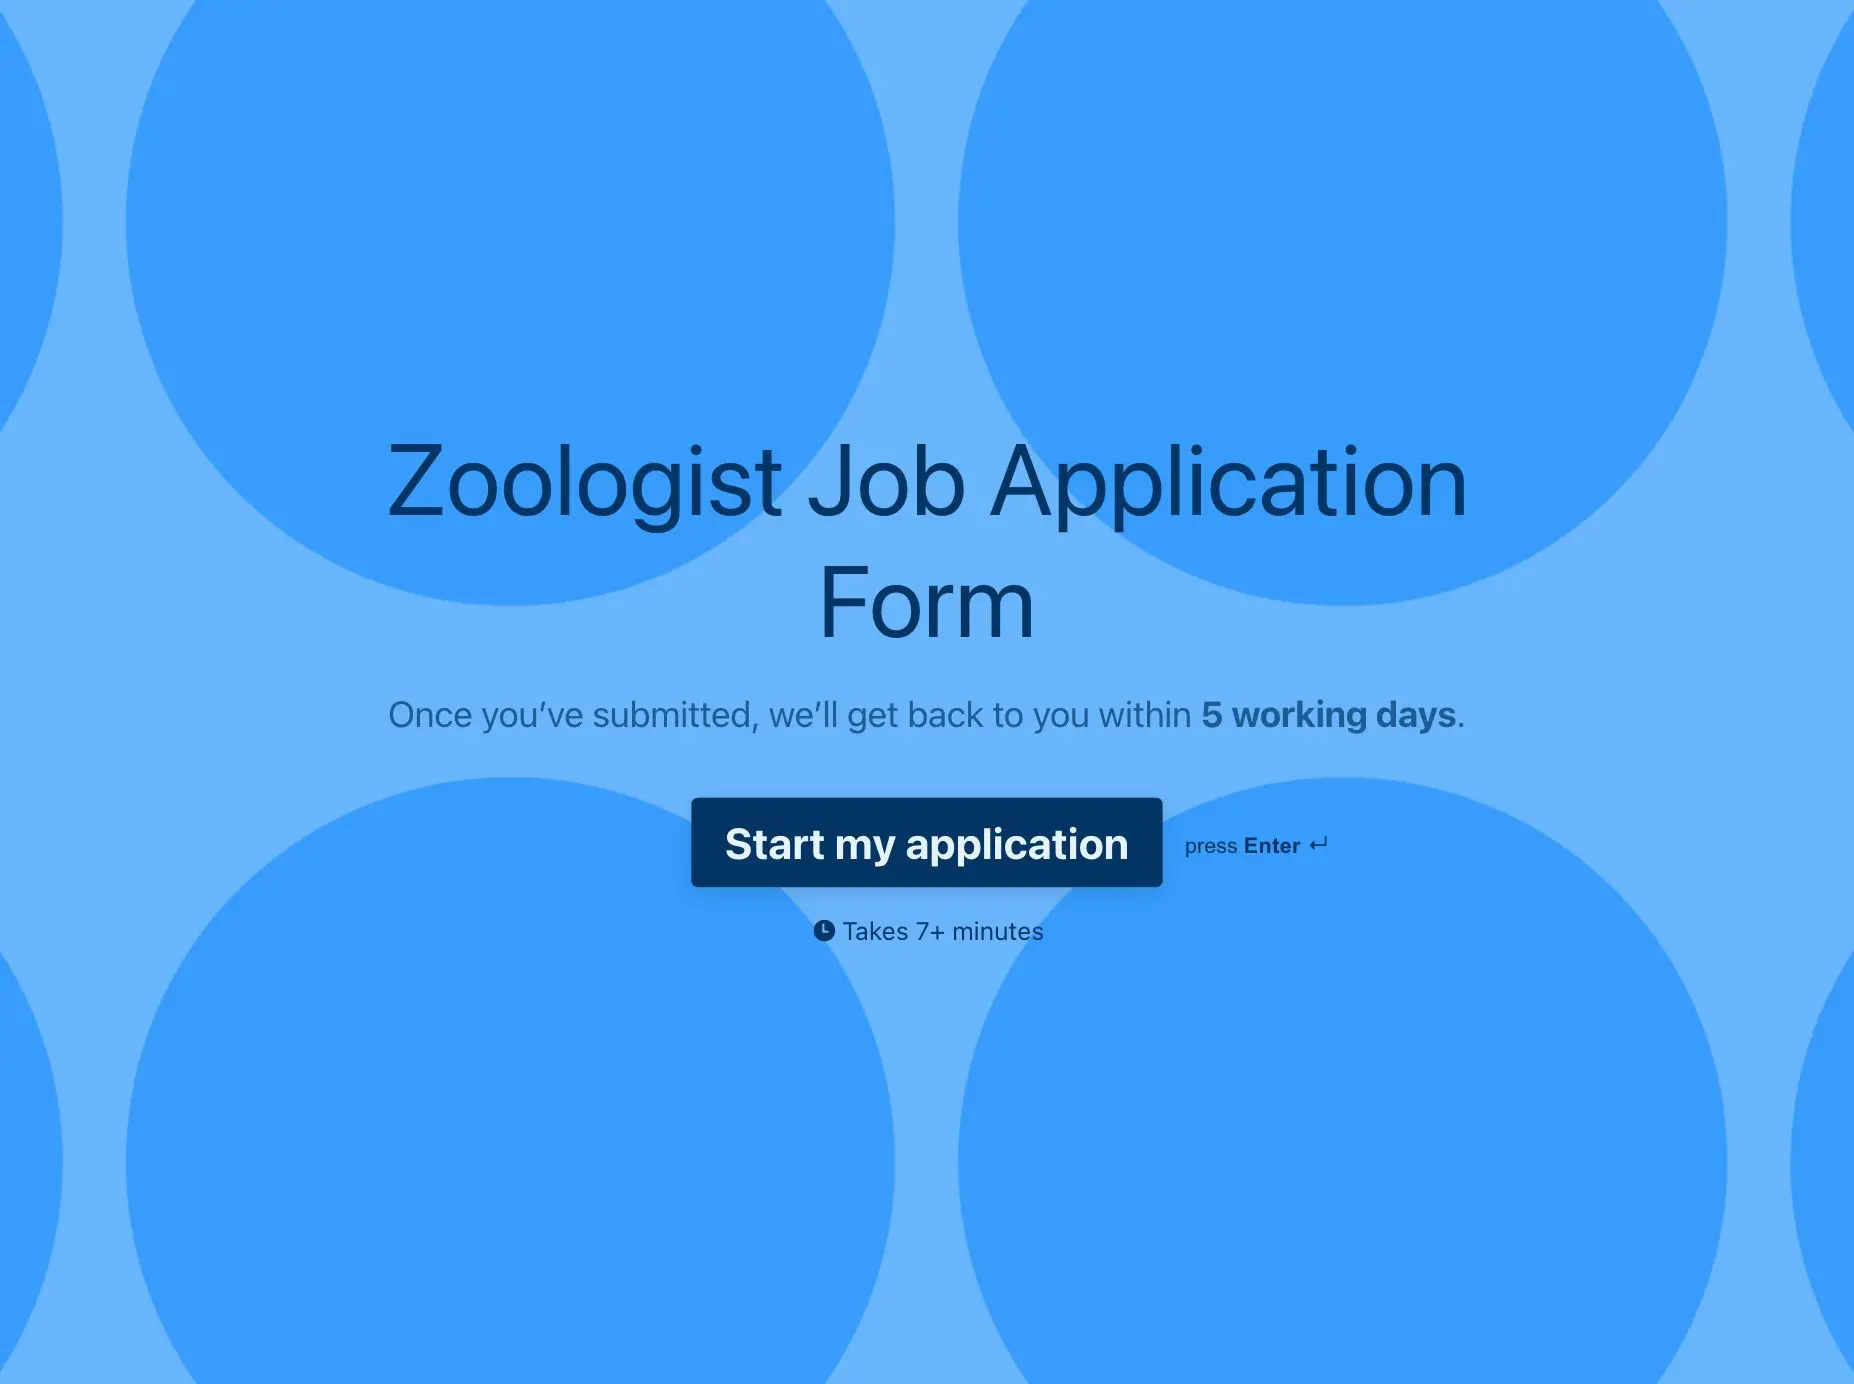 Zoologist Job Application Form Template Hero